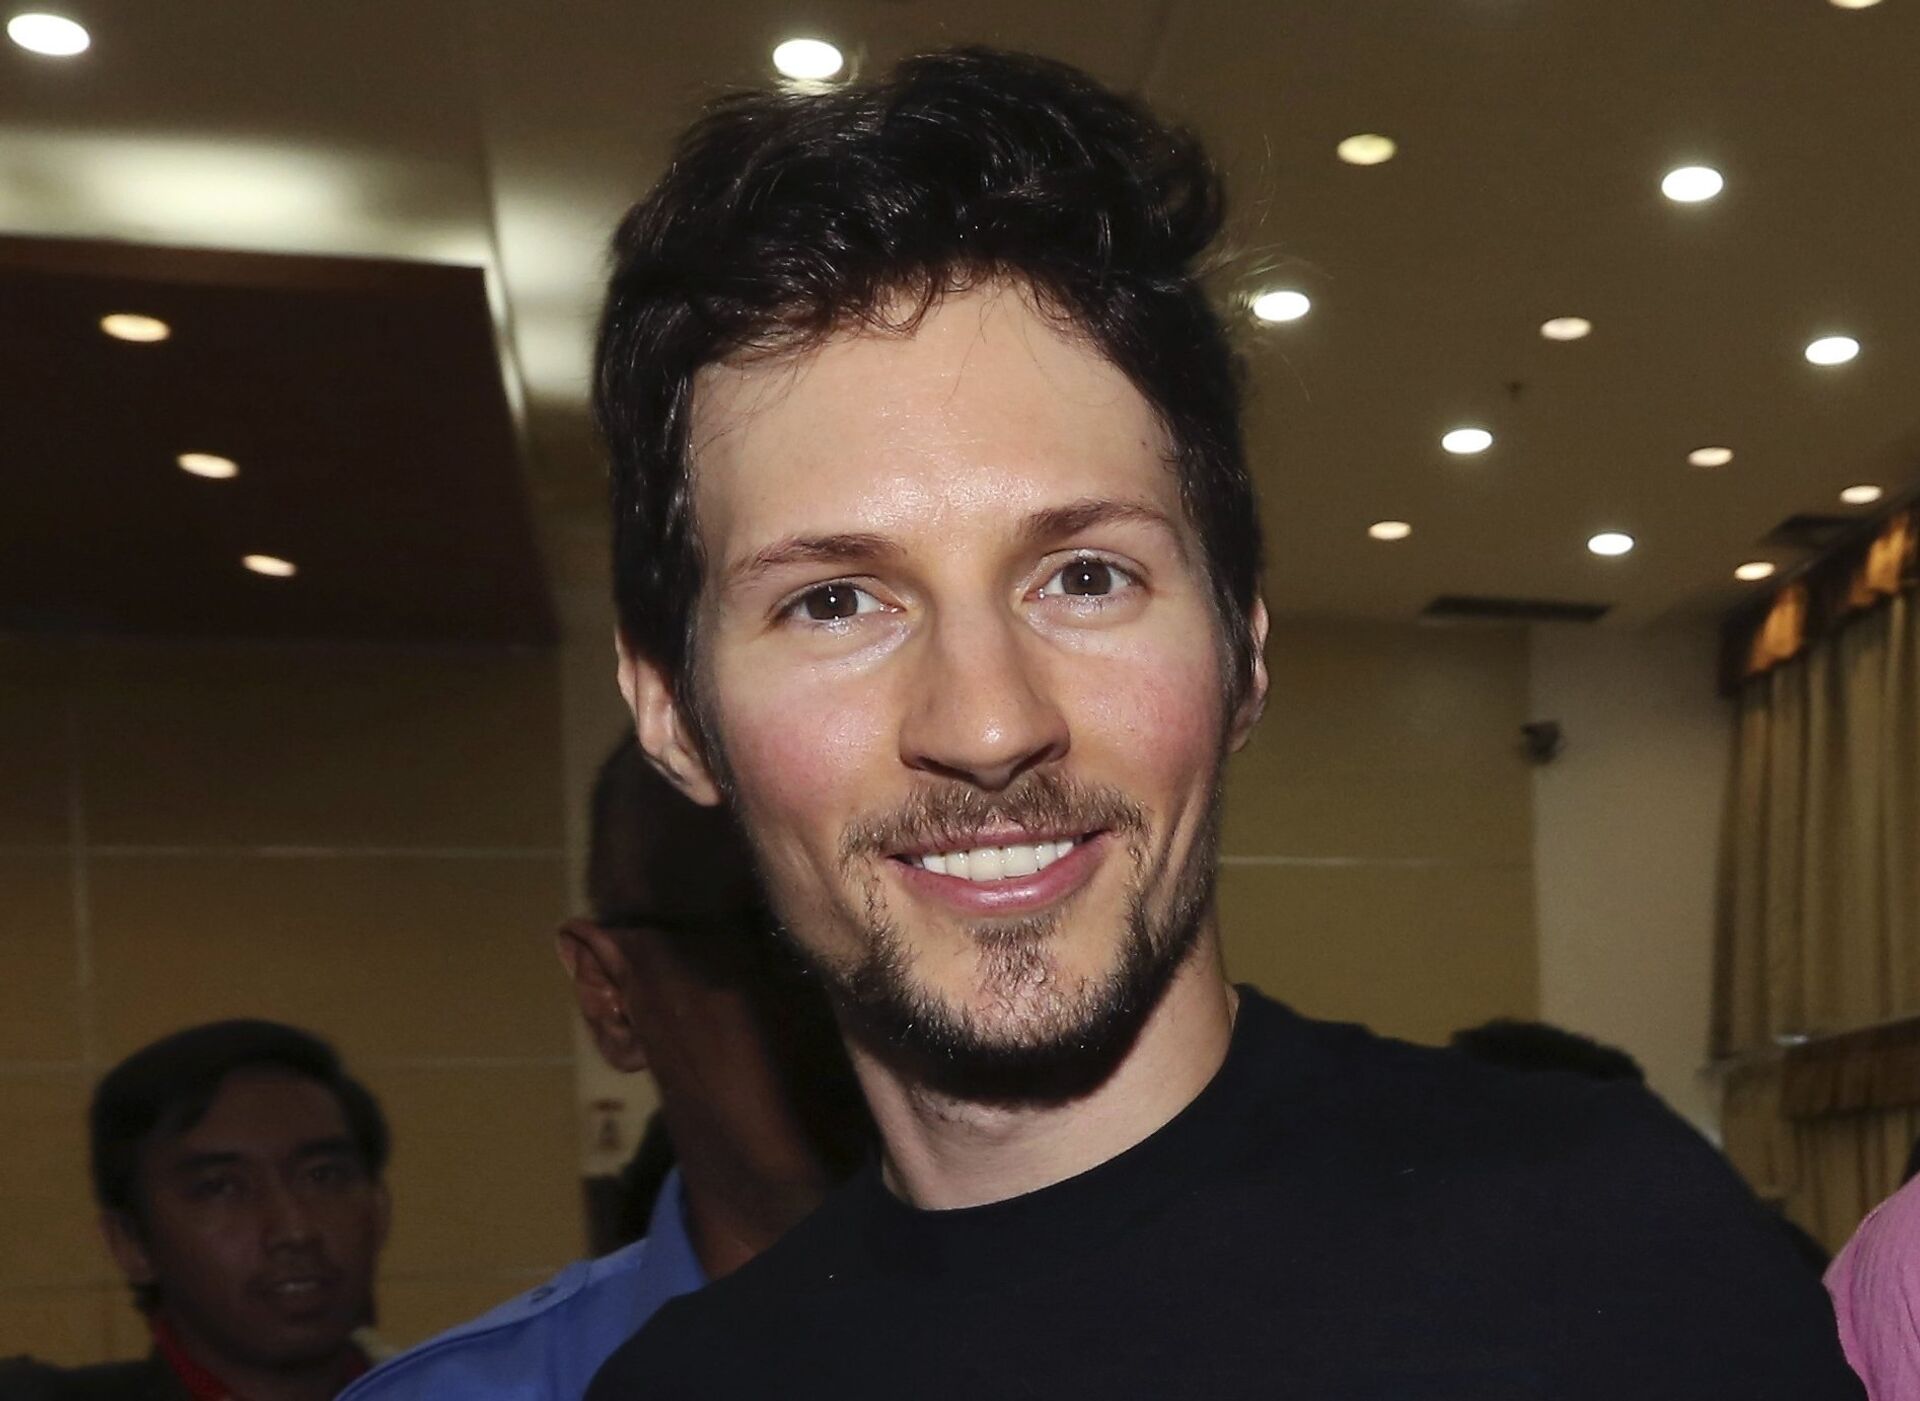 Telegram Founder Pavel Durov Meets With Dubai Crown Prince - Sputnik International, 1920, 06.02.2021